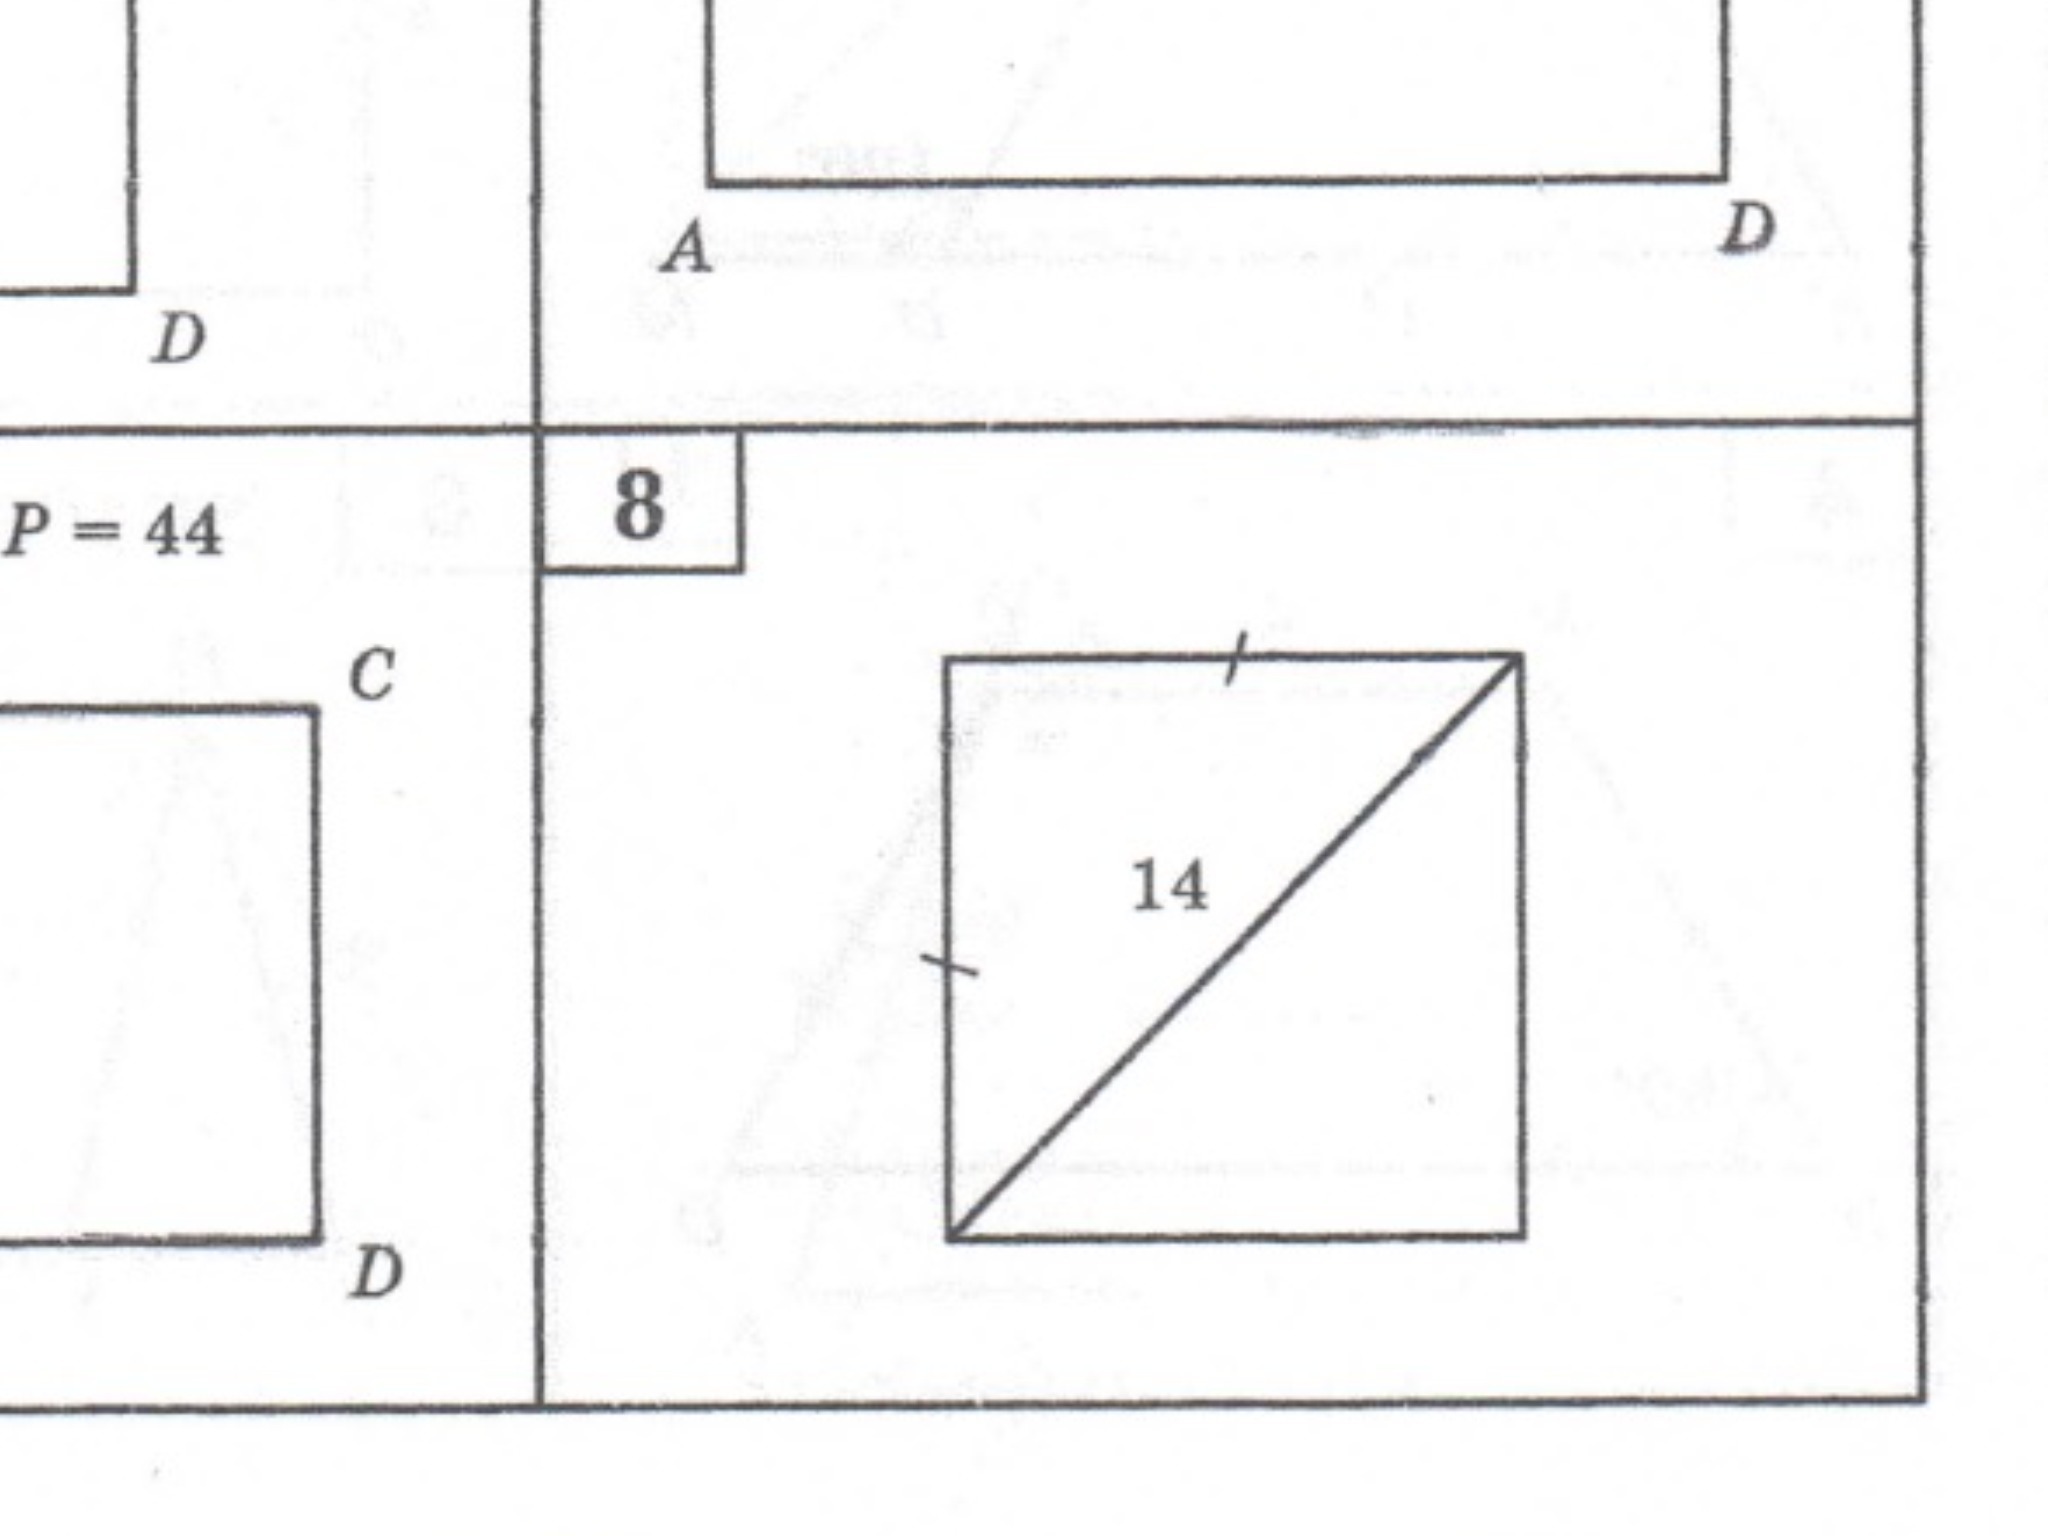 Найдите площадь ABCD. Таблица 11 Найдите площадь ABCD. Рисунок 362 найти площадь ABCD. Найдите площадь листа бумаги формата с4